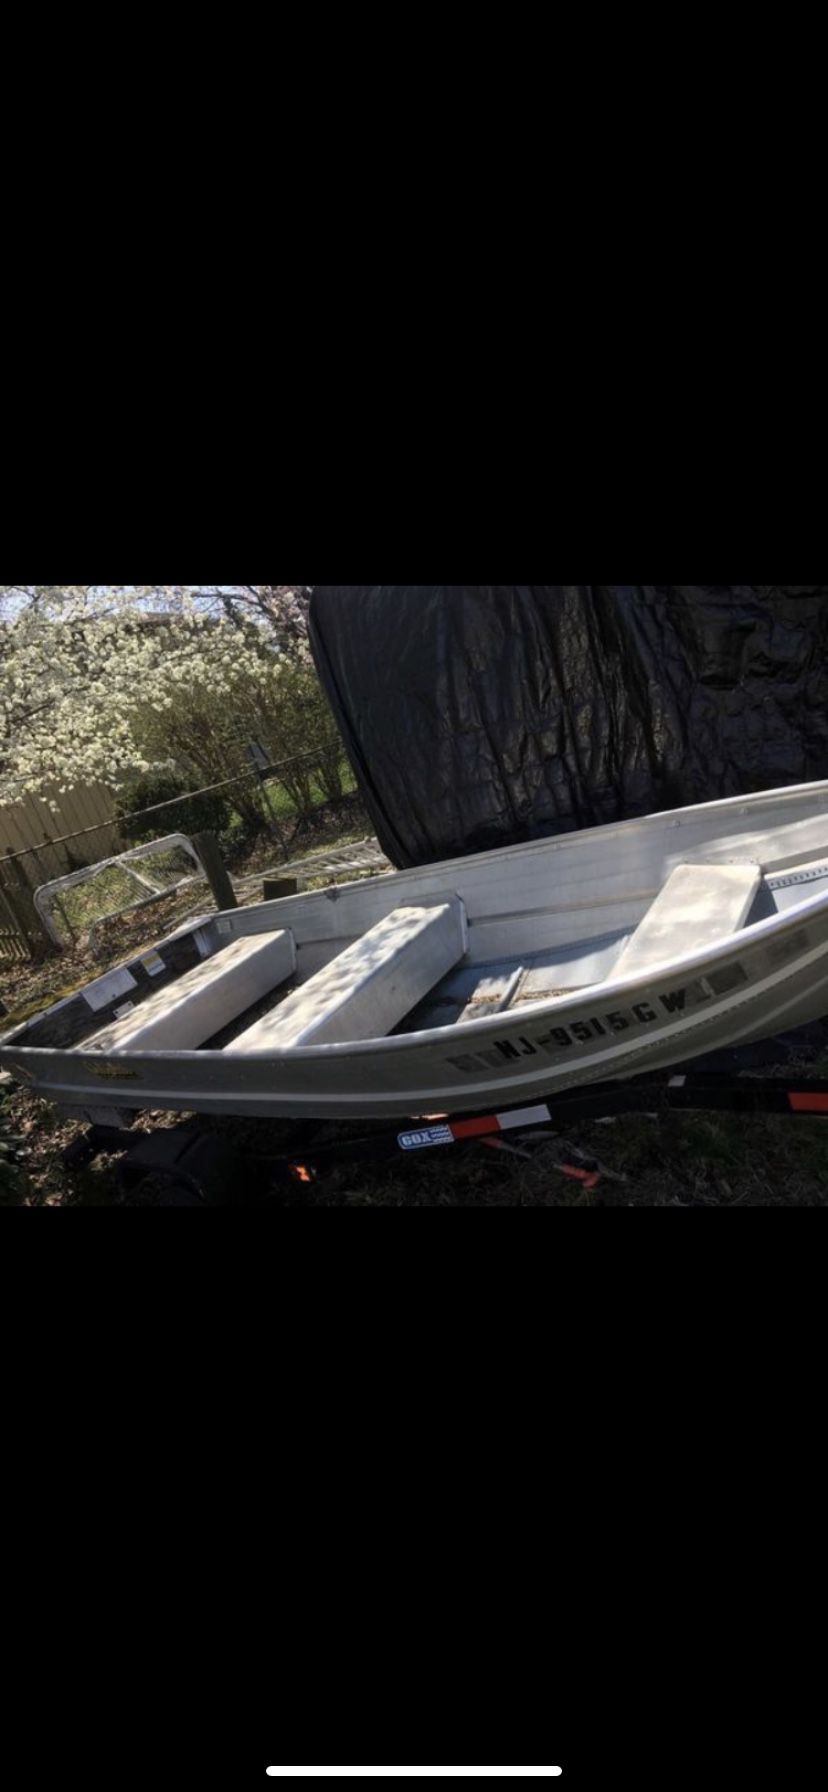 Cabelas 12’ Aluminum Boat with Trailer